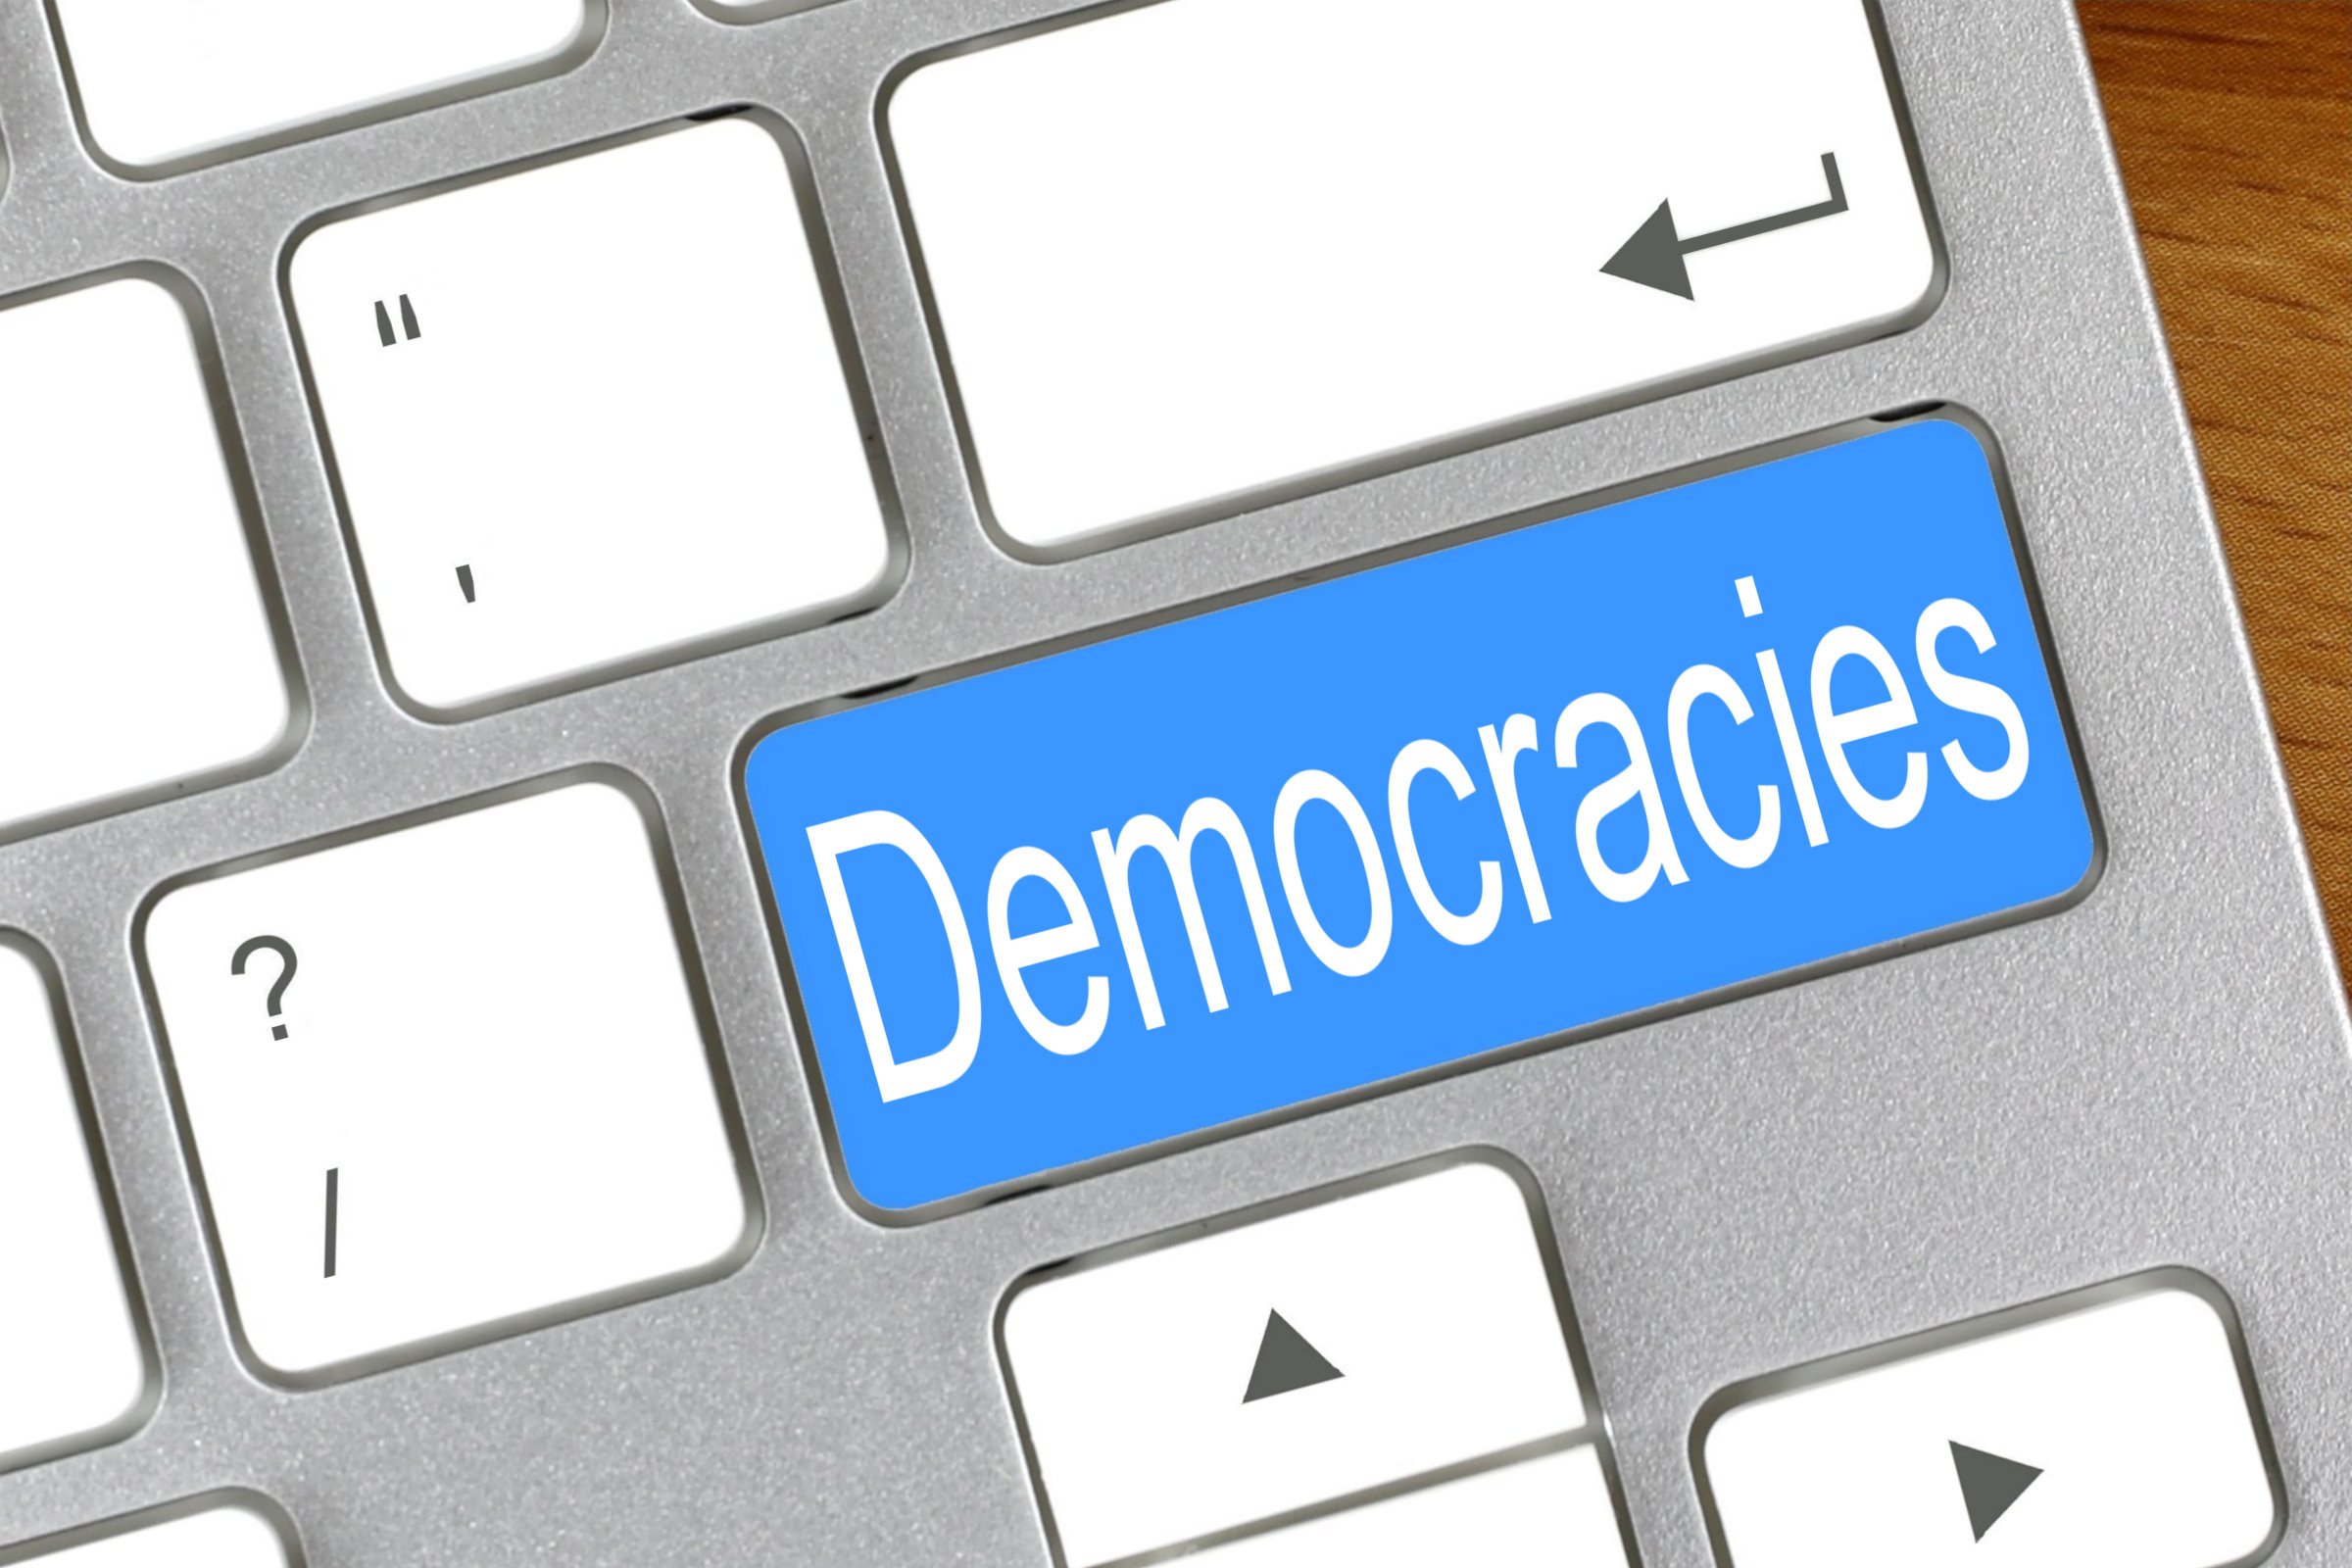 democracies